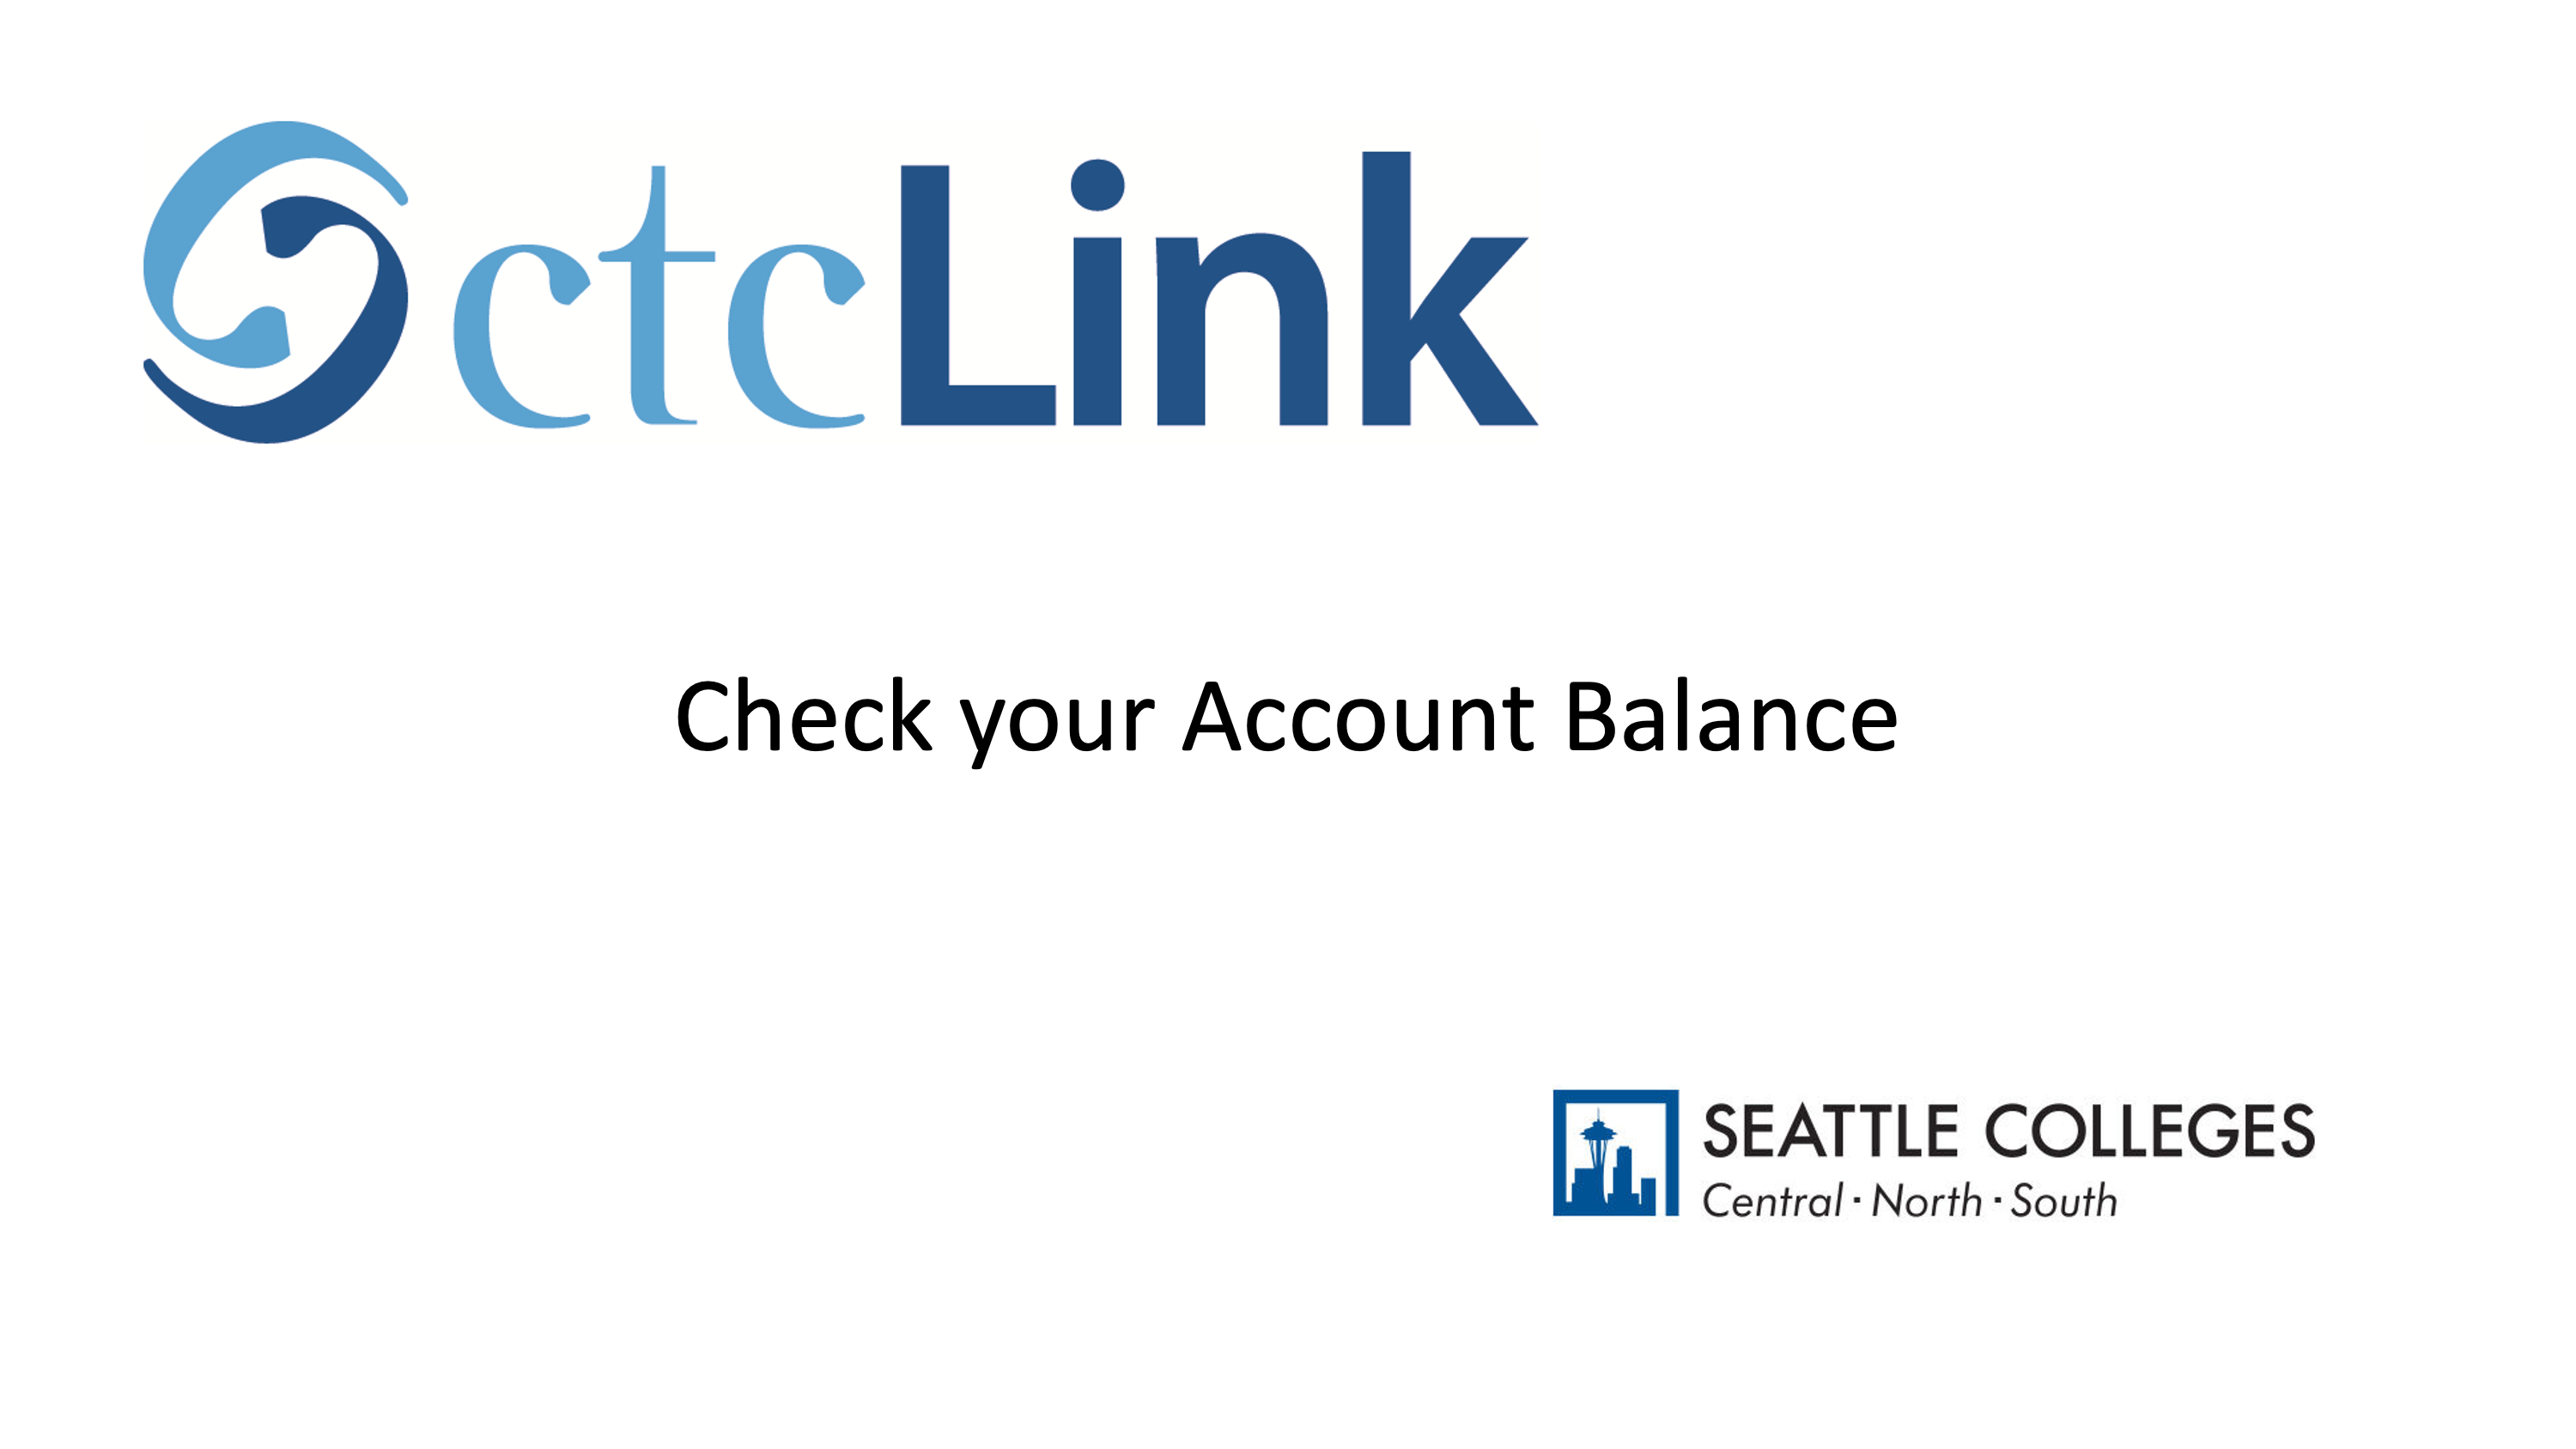 Check your Account Balance